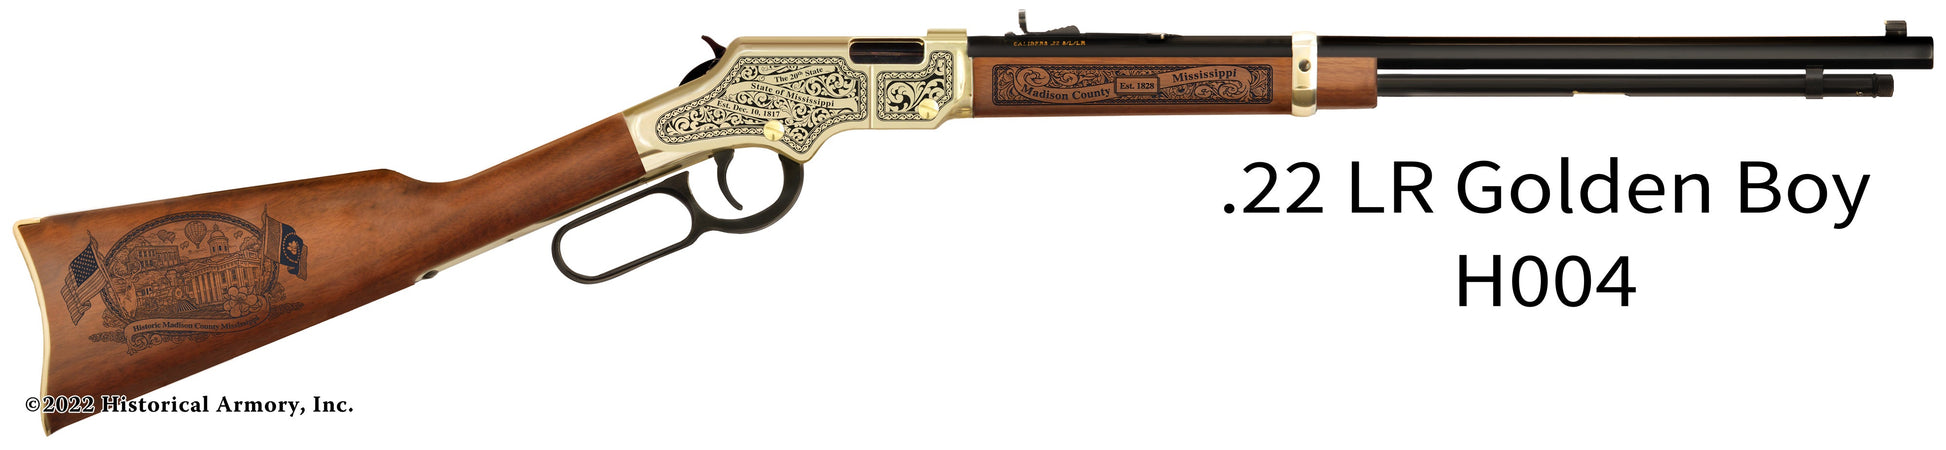 Madison County Mississippi Engraved Henry Golden Boy Rifle